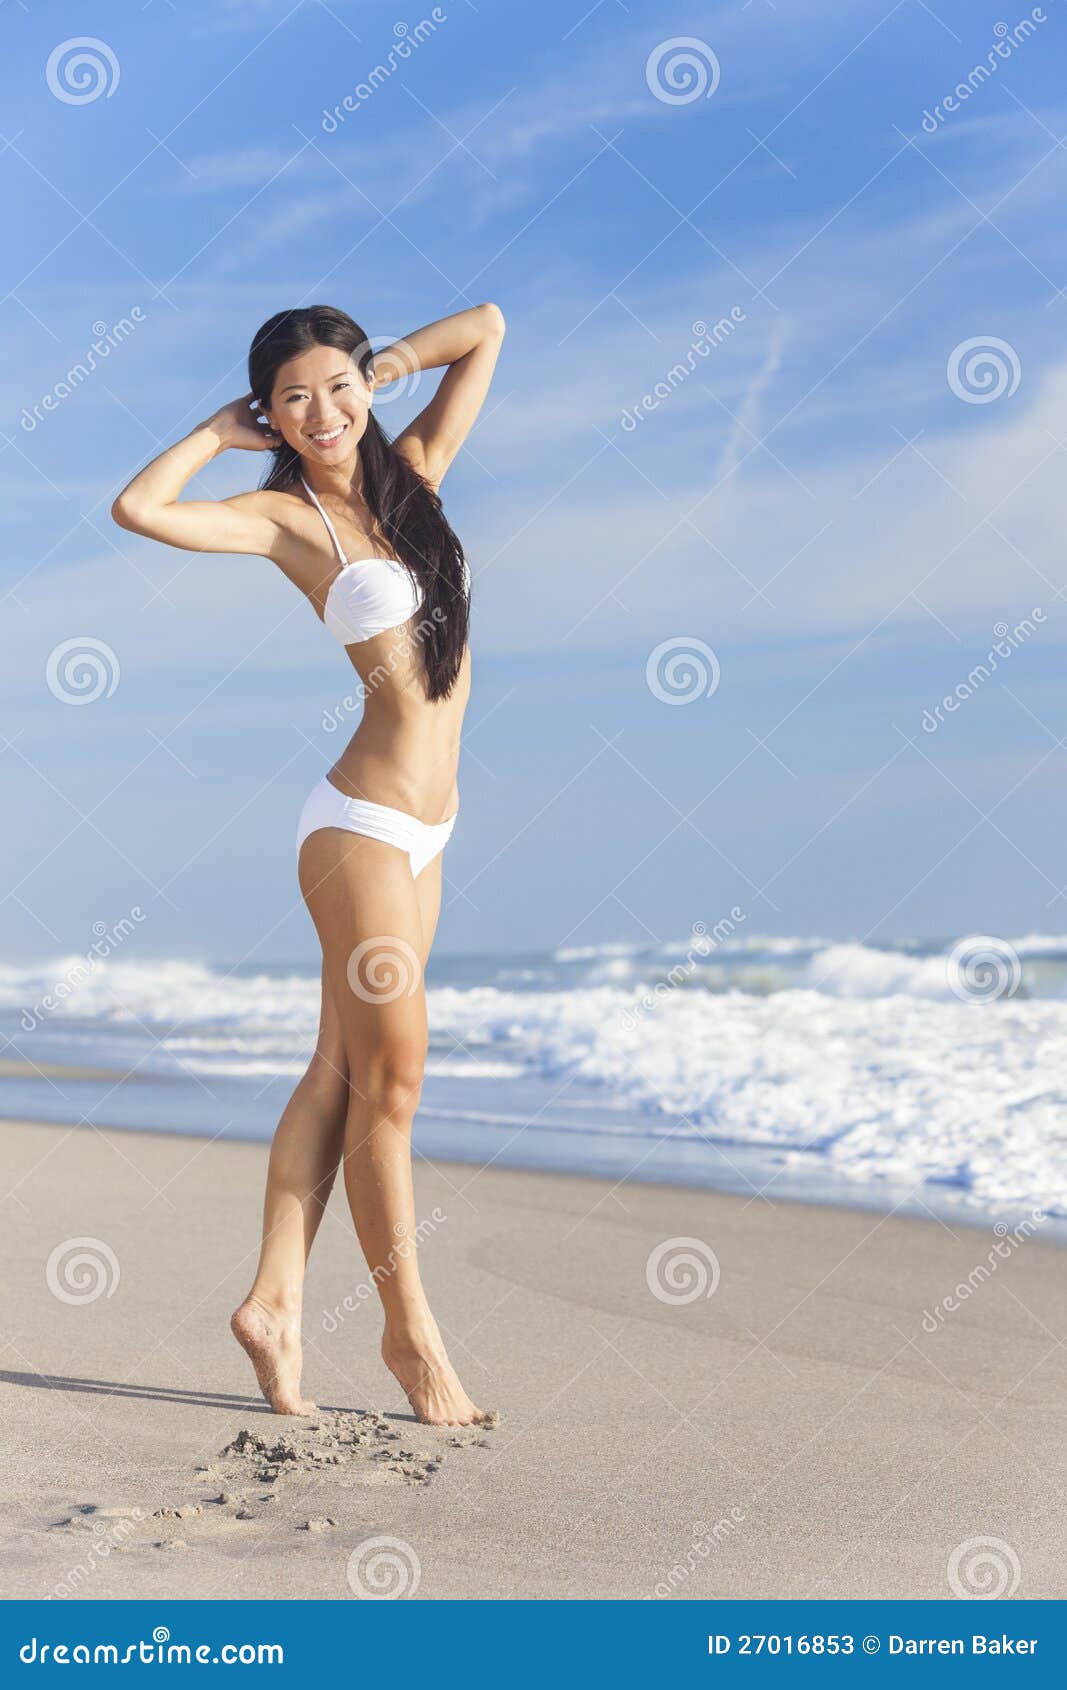 Beach nude teens 